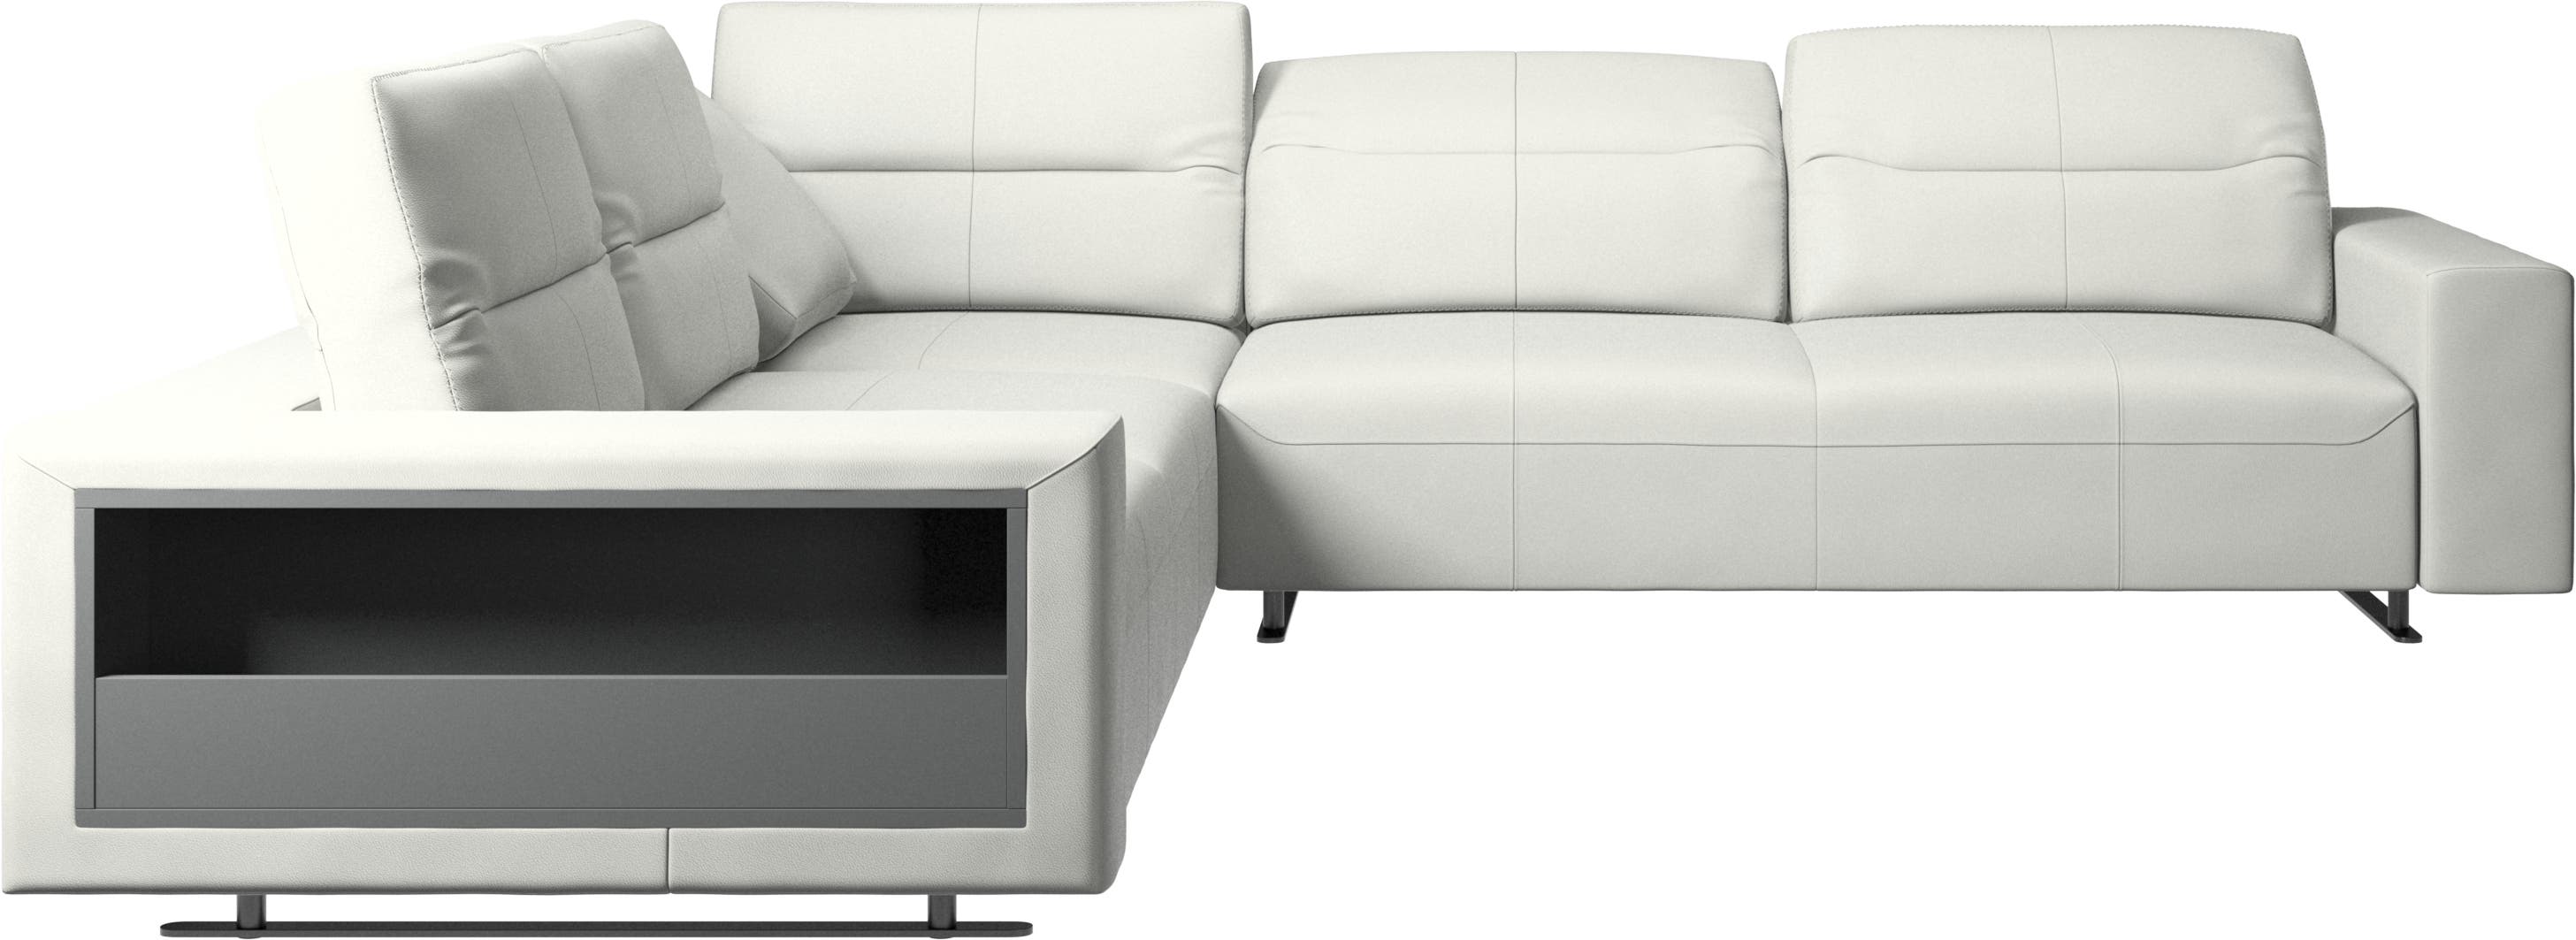 Hampton corner sofa with adjustable back and storage